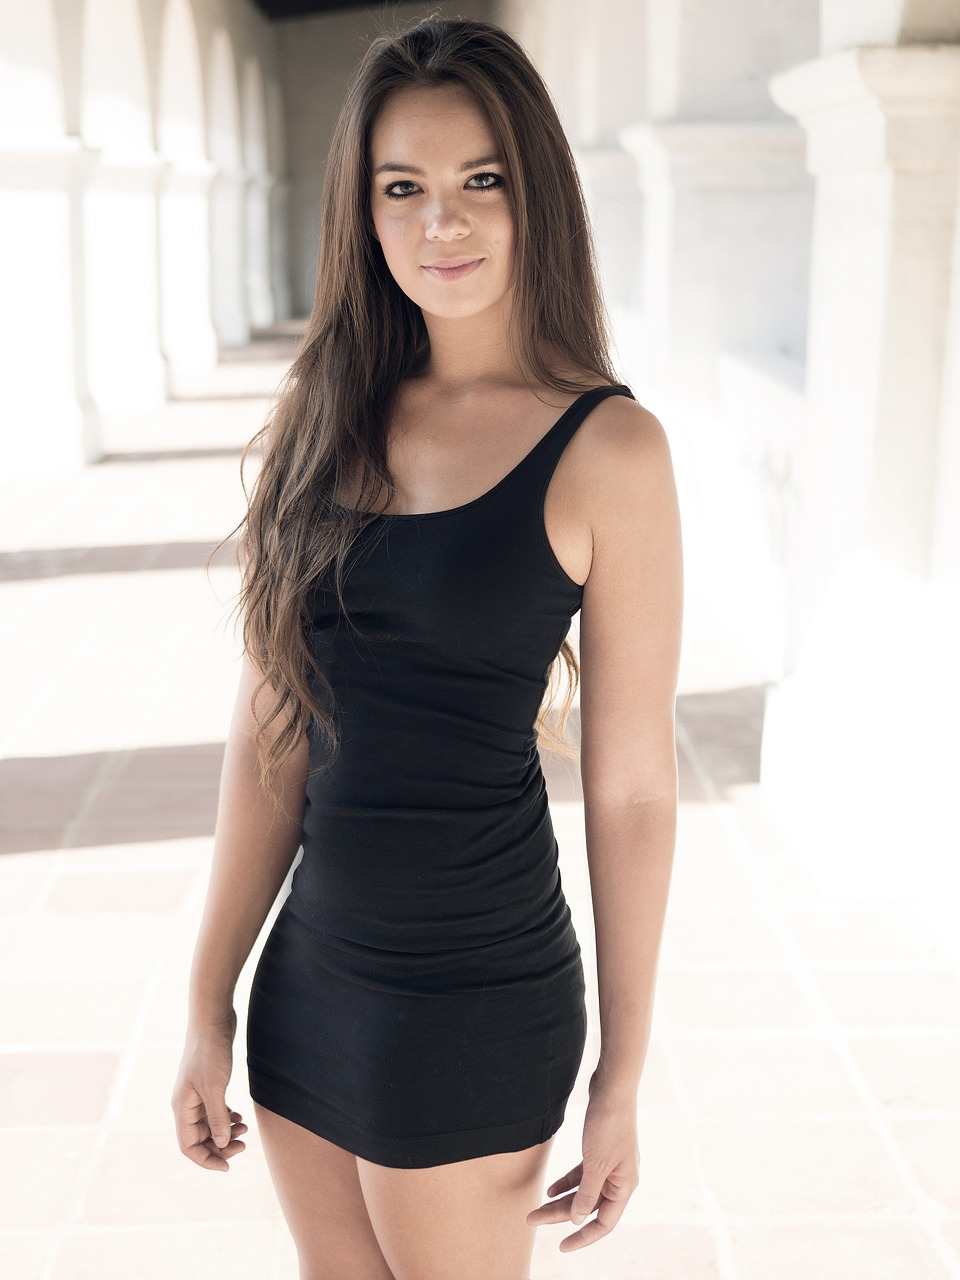 Image - girl woman black dress long hair